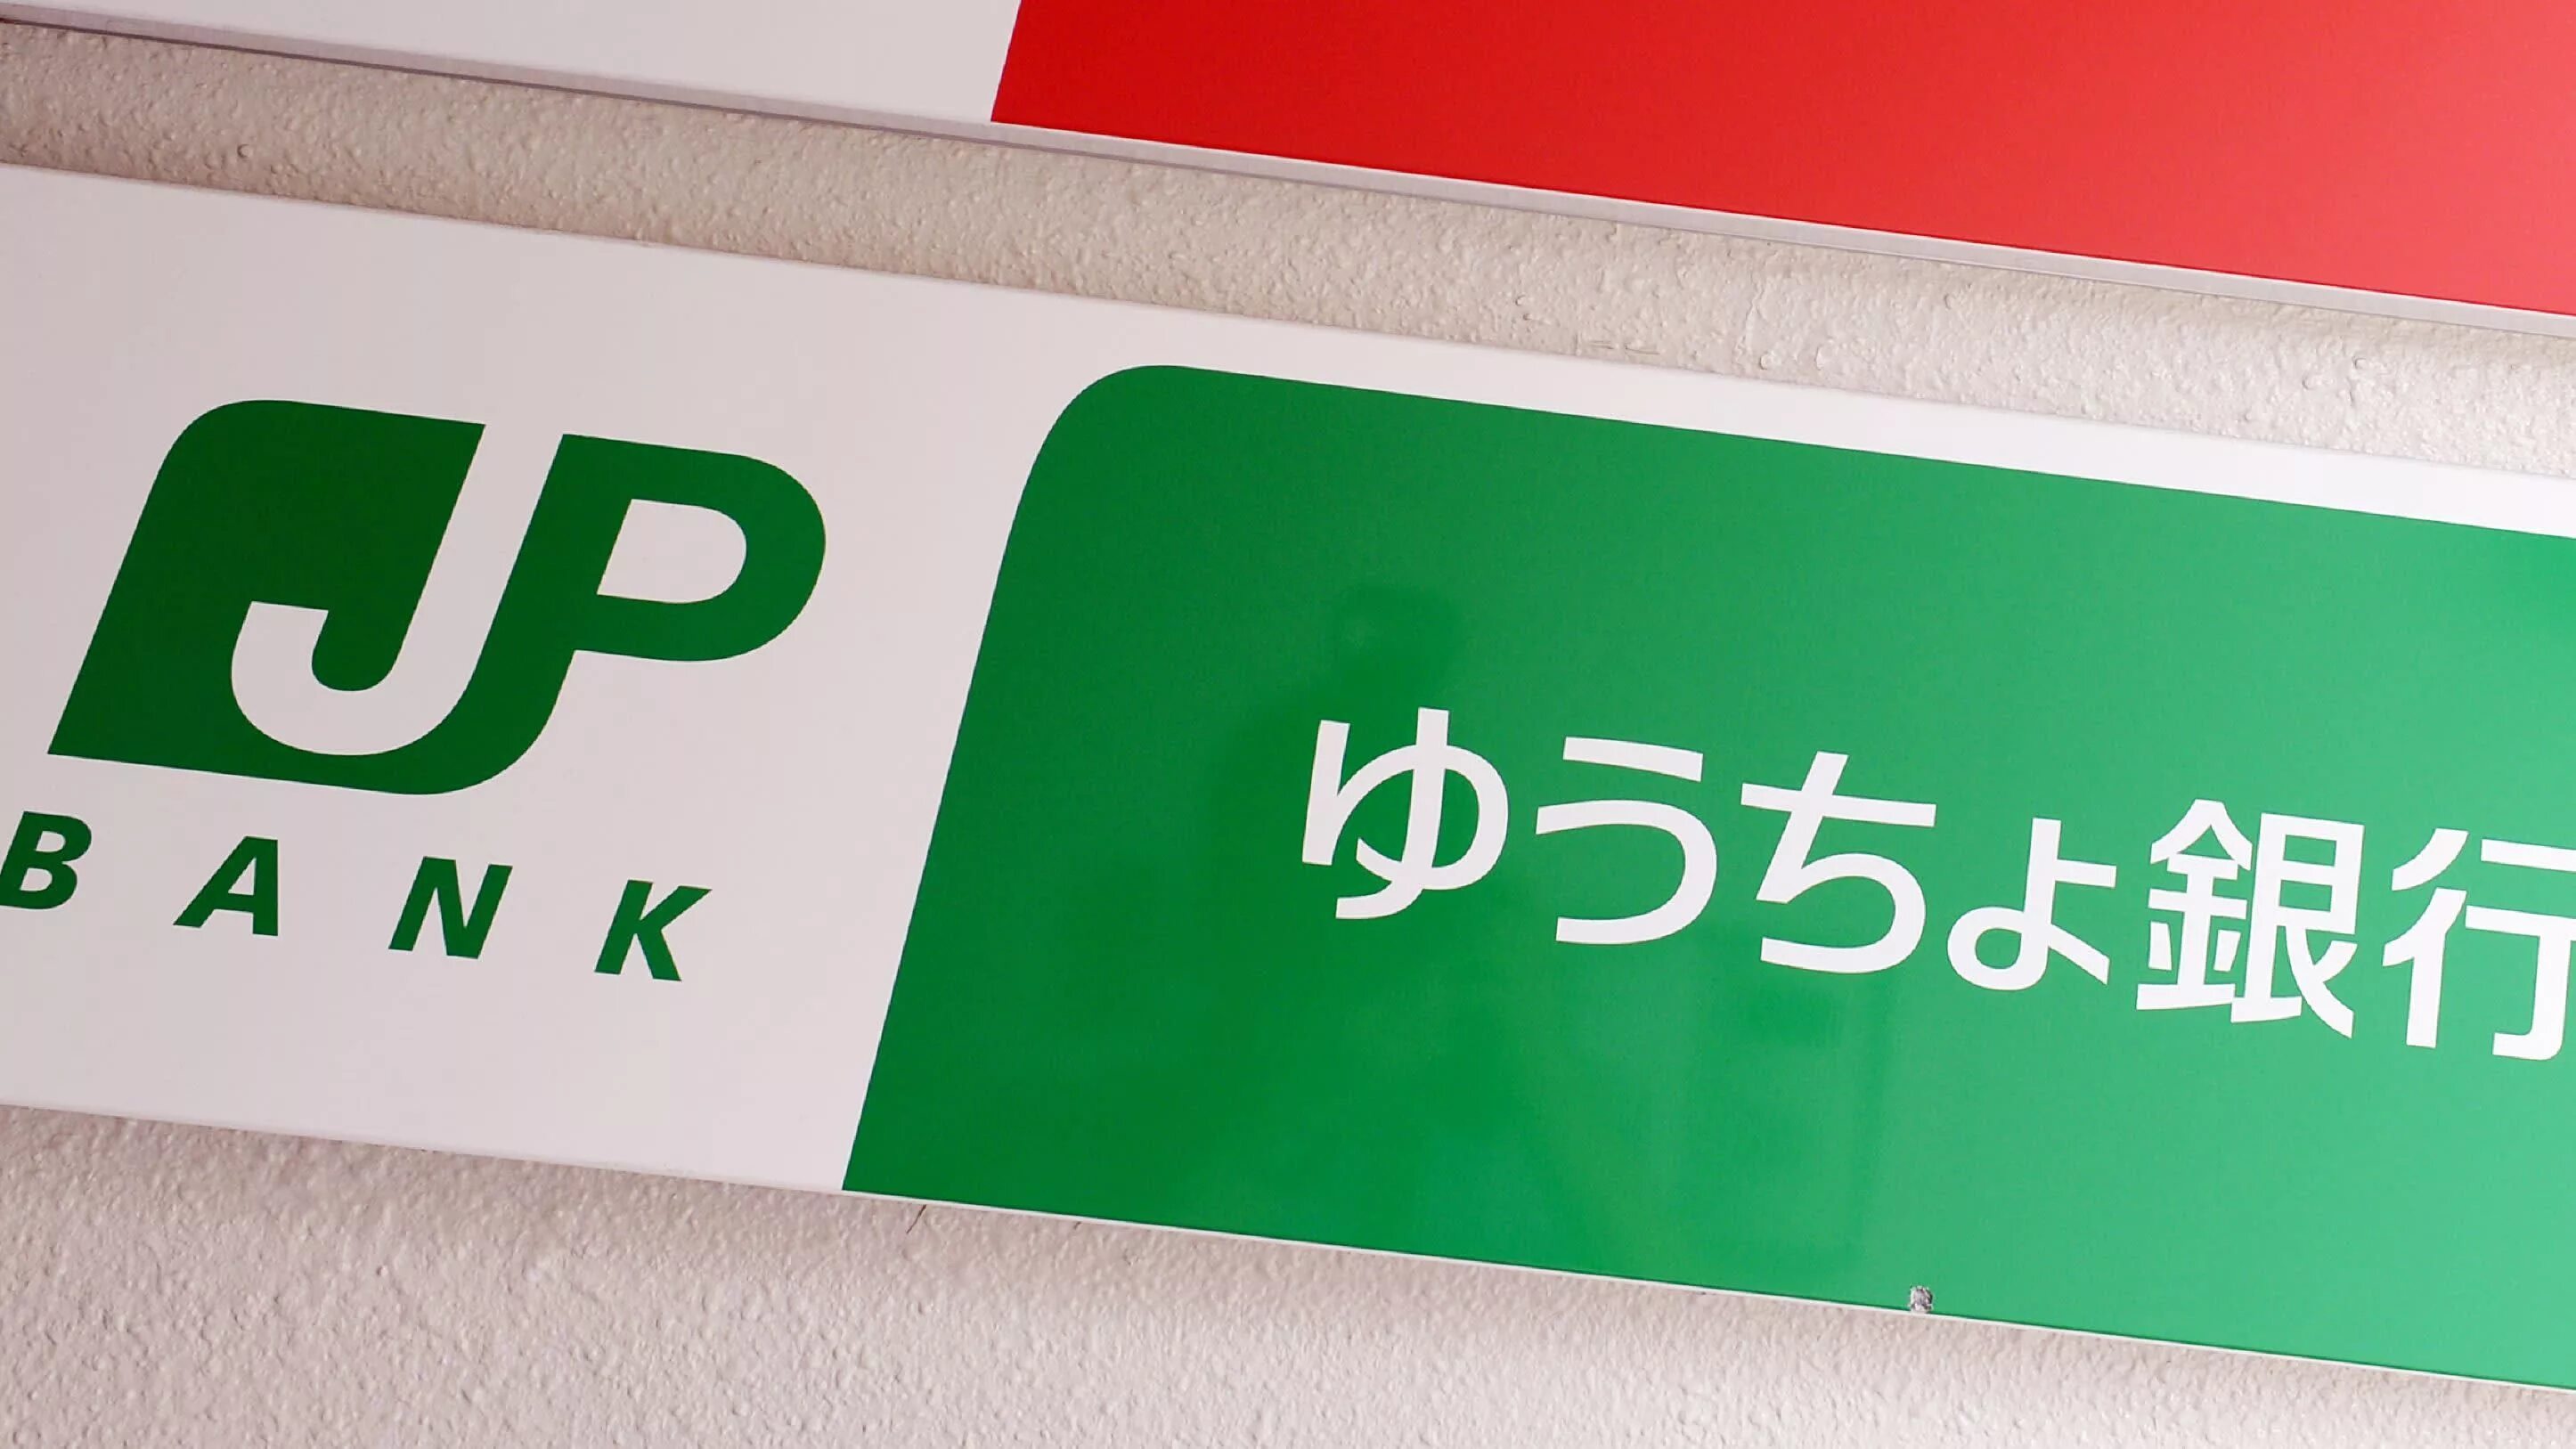 Back post. Почтовый банк Японии. Japan Post Bank logo. Postal savings Bank of Japan. Карта банка Японии.